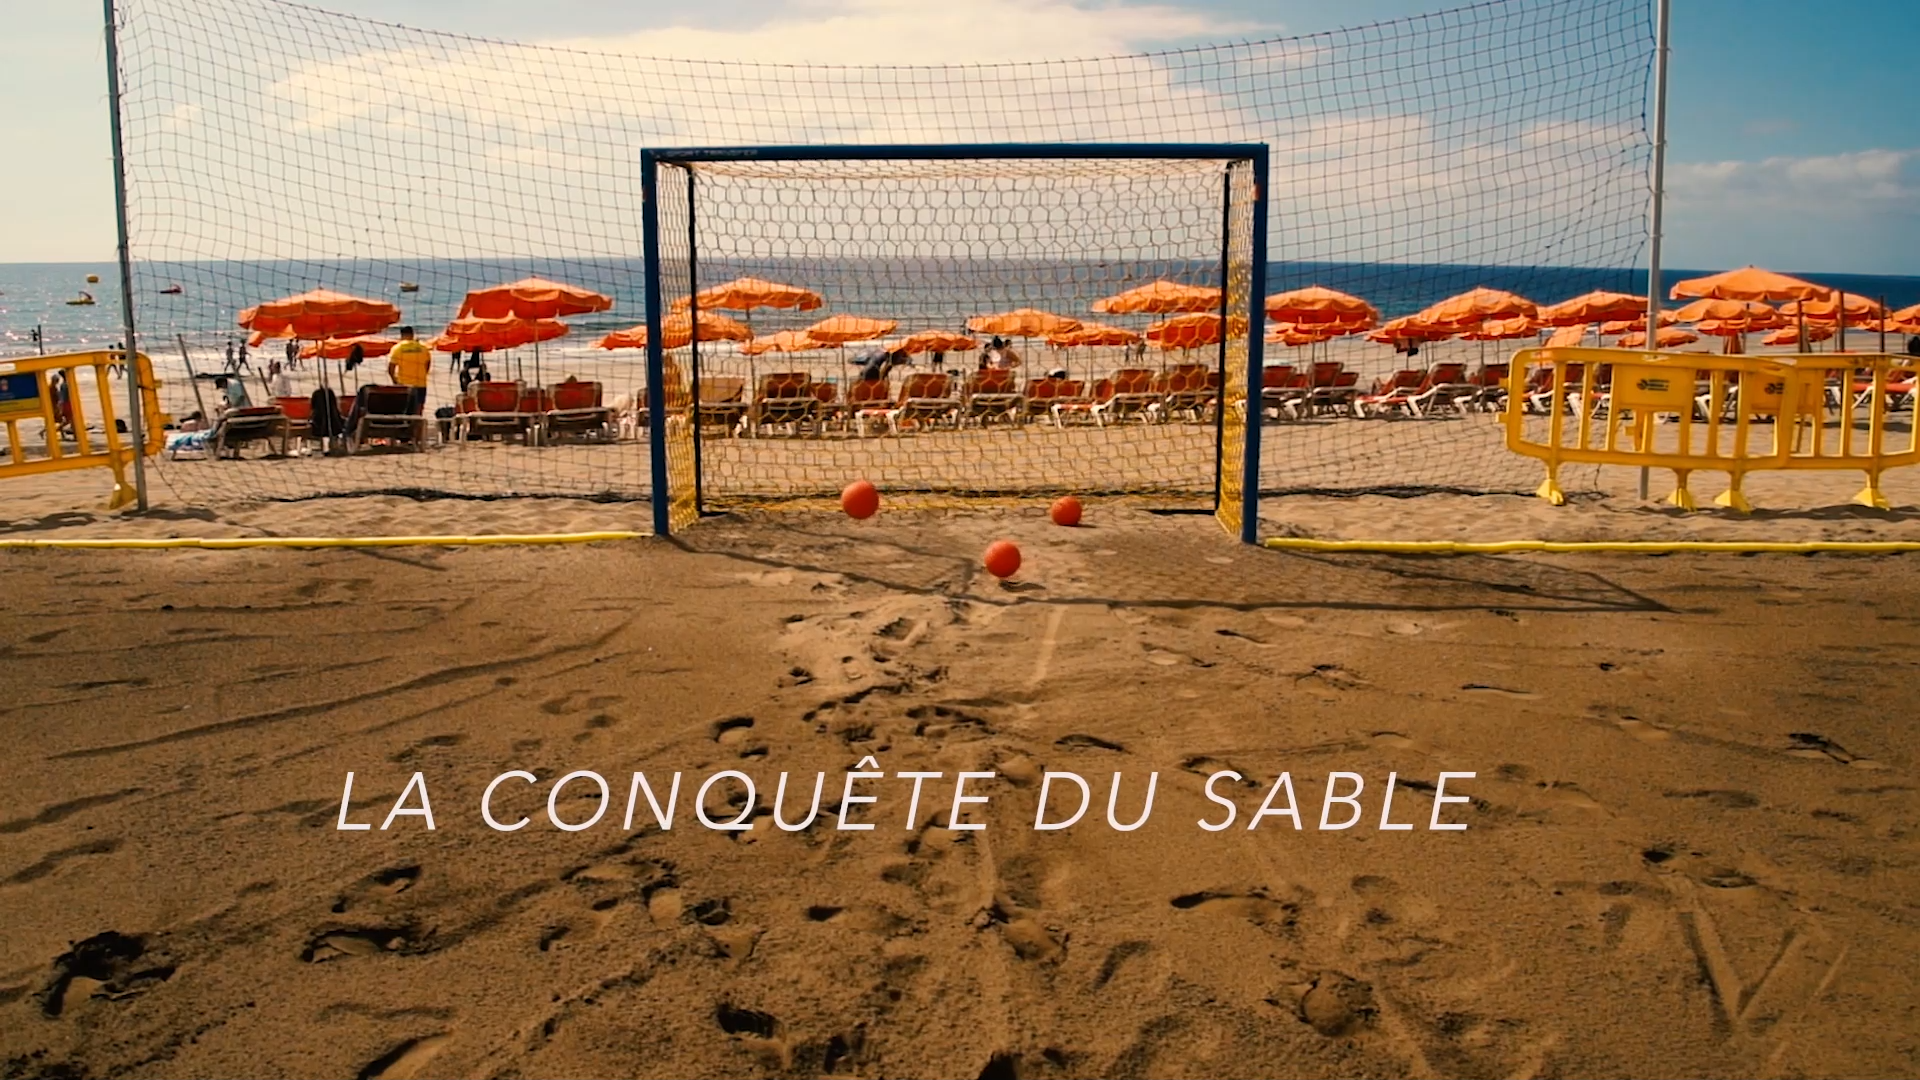 Beach handball - La conquête du sable